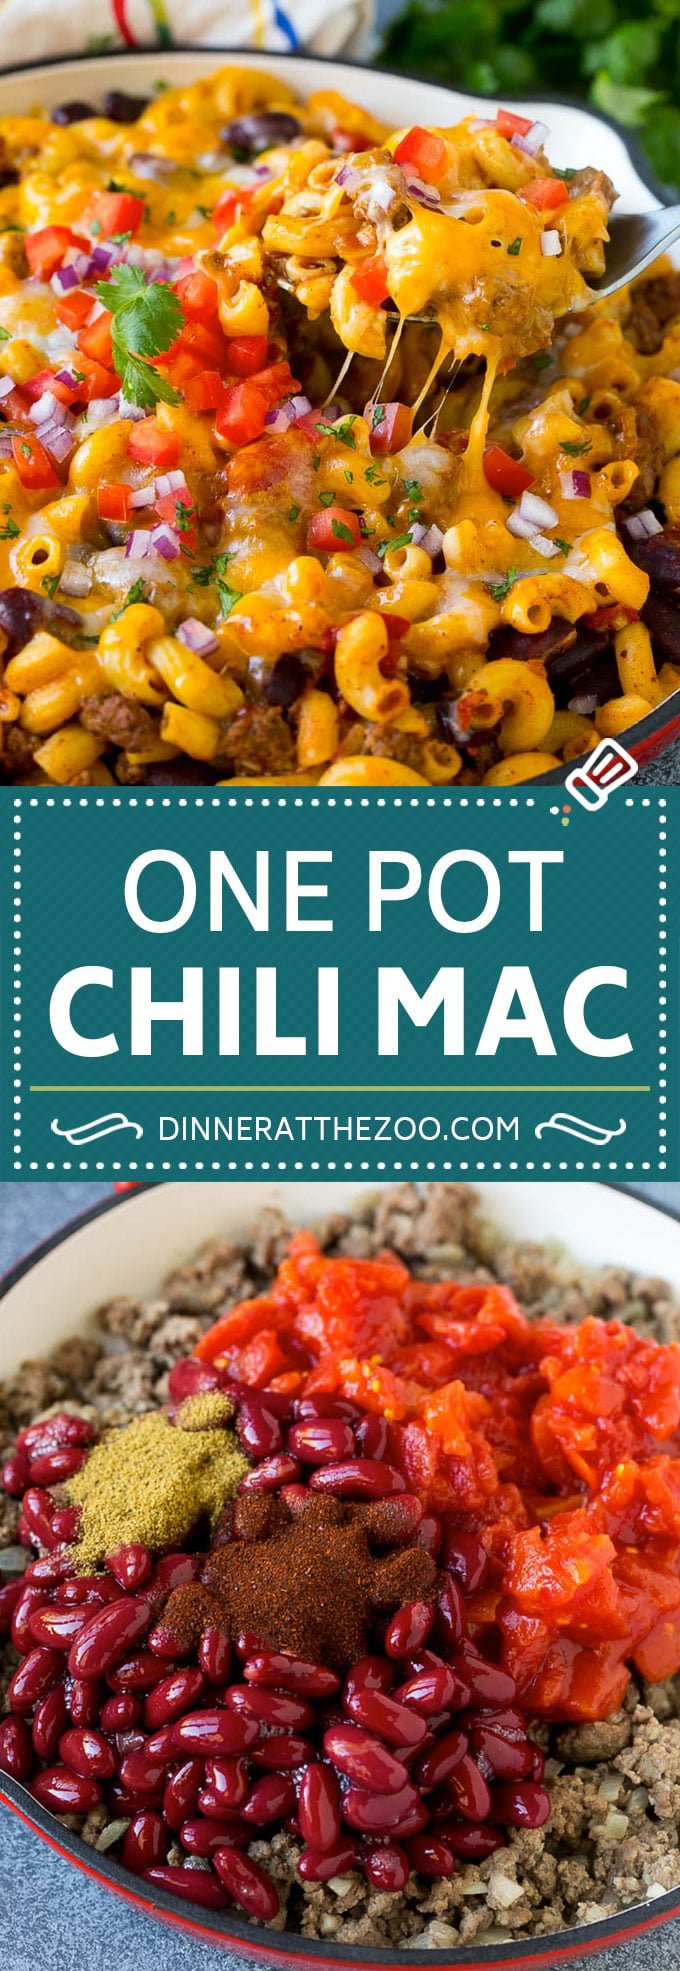 One Pot Chili Mac Recipe | One Pot Pasta | Chili Mac #dinner #beef #pasta #macaroni #beans #cheese #dinneratthezoo #onepot